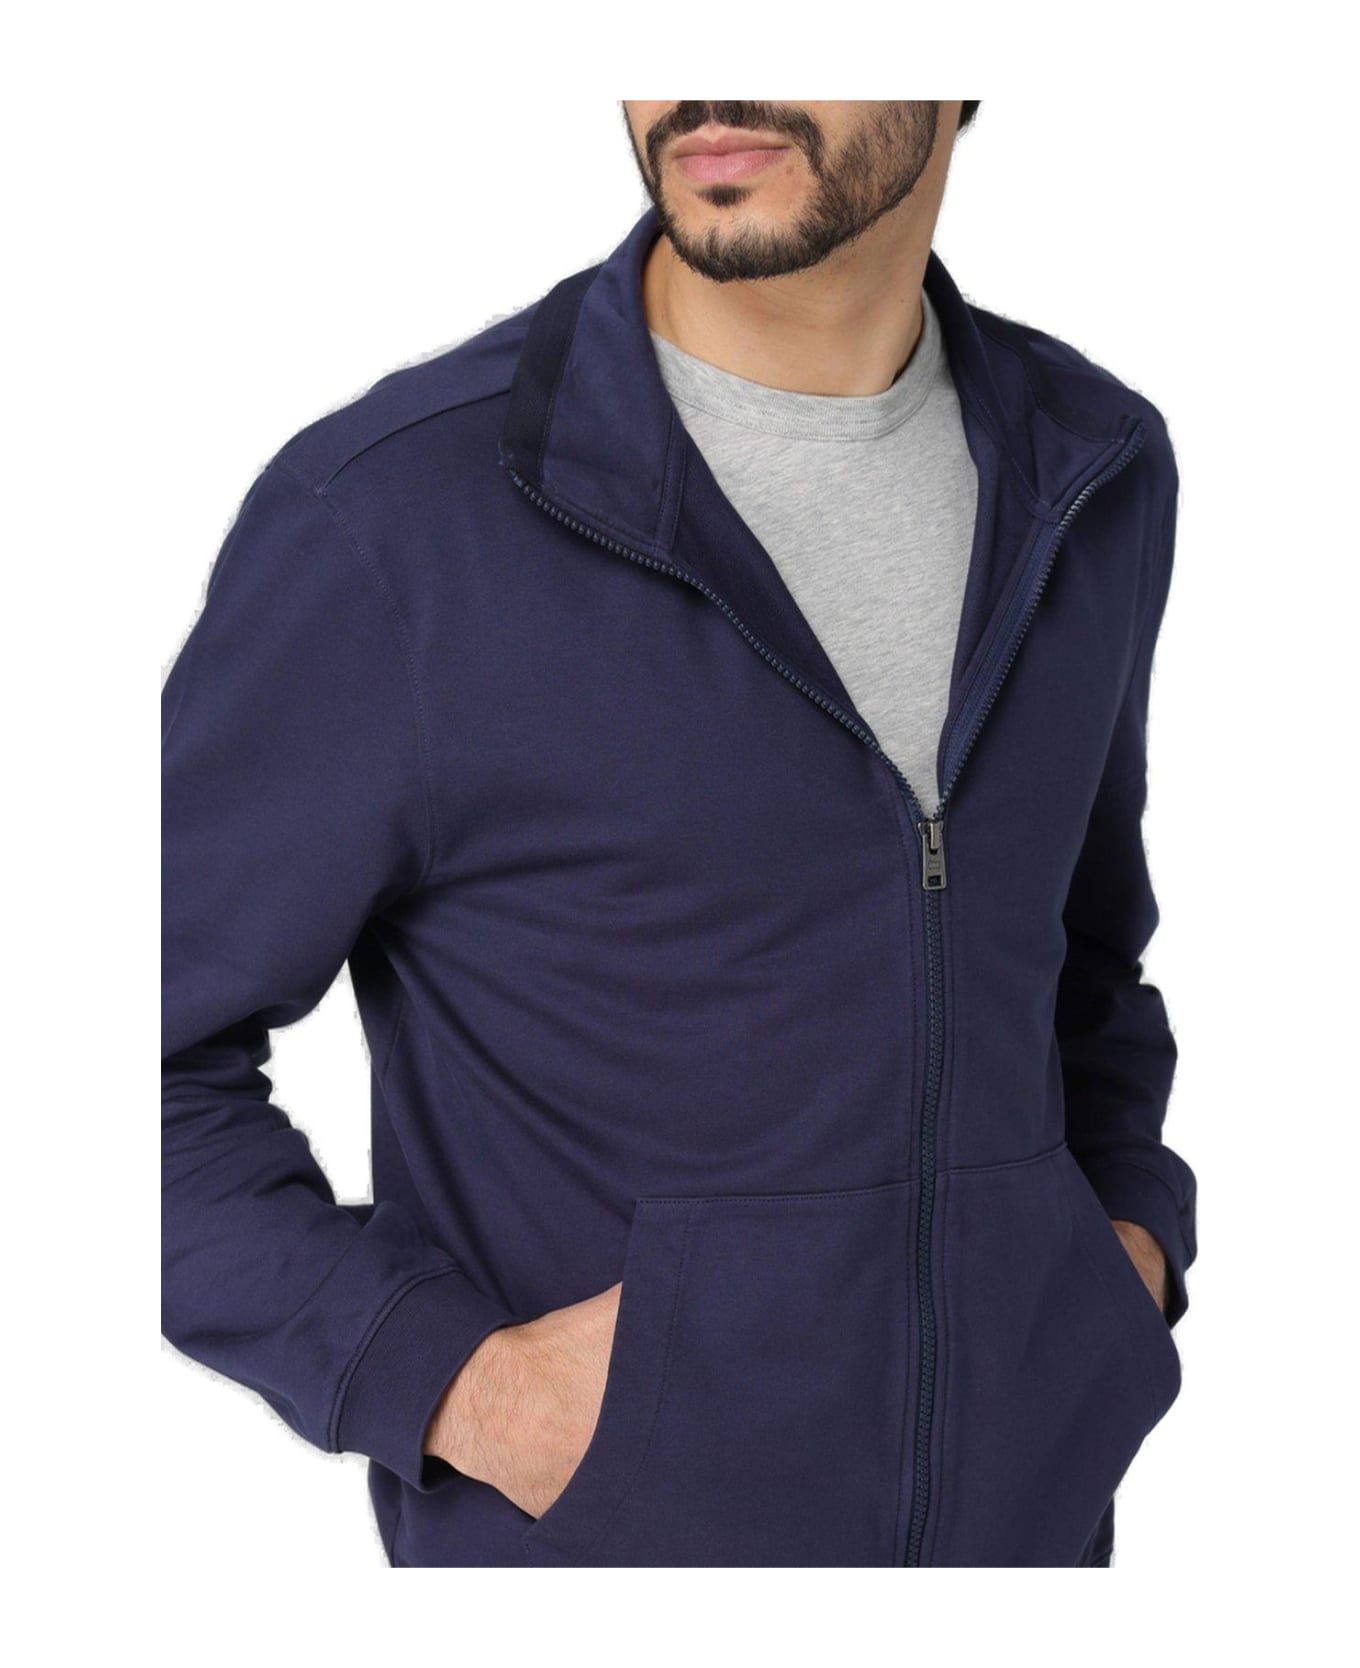 Woolrich Long-sleeved Zip-up Sweatshirt Woolrich - BLUE